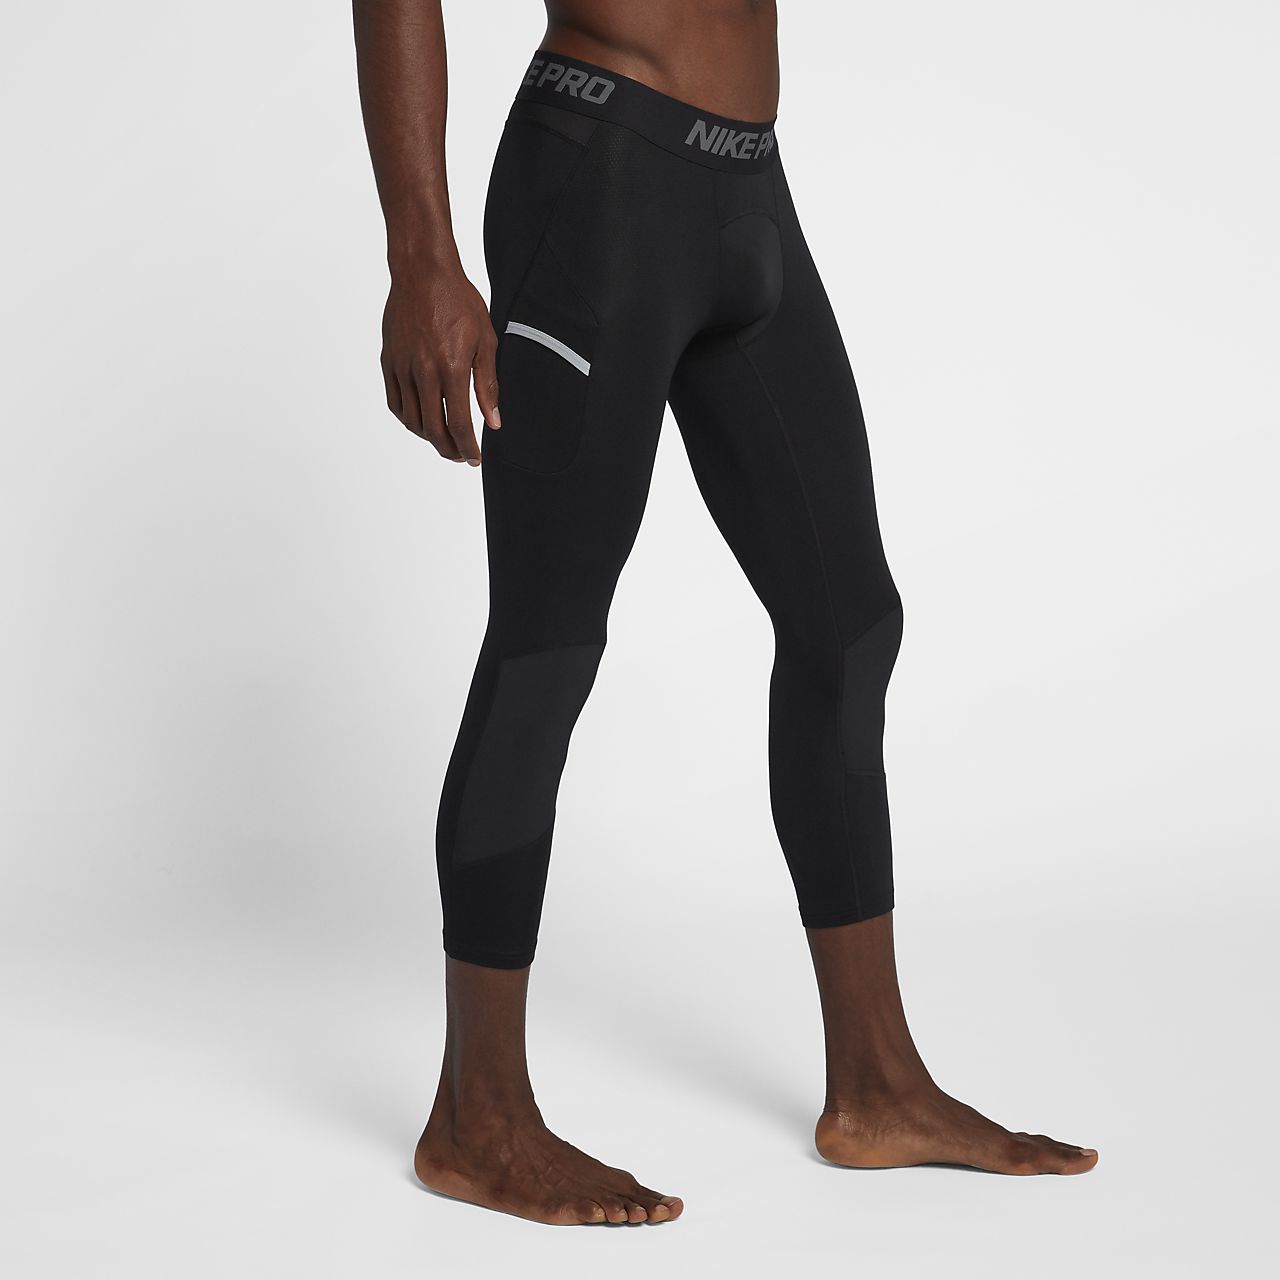 Men One Leg Compression Pants 3/4 Capri Tights Athletic Basketball Leggings  Workout Base Layer Underwear - Walmart.com